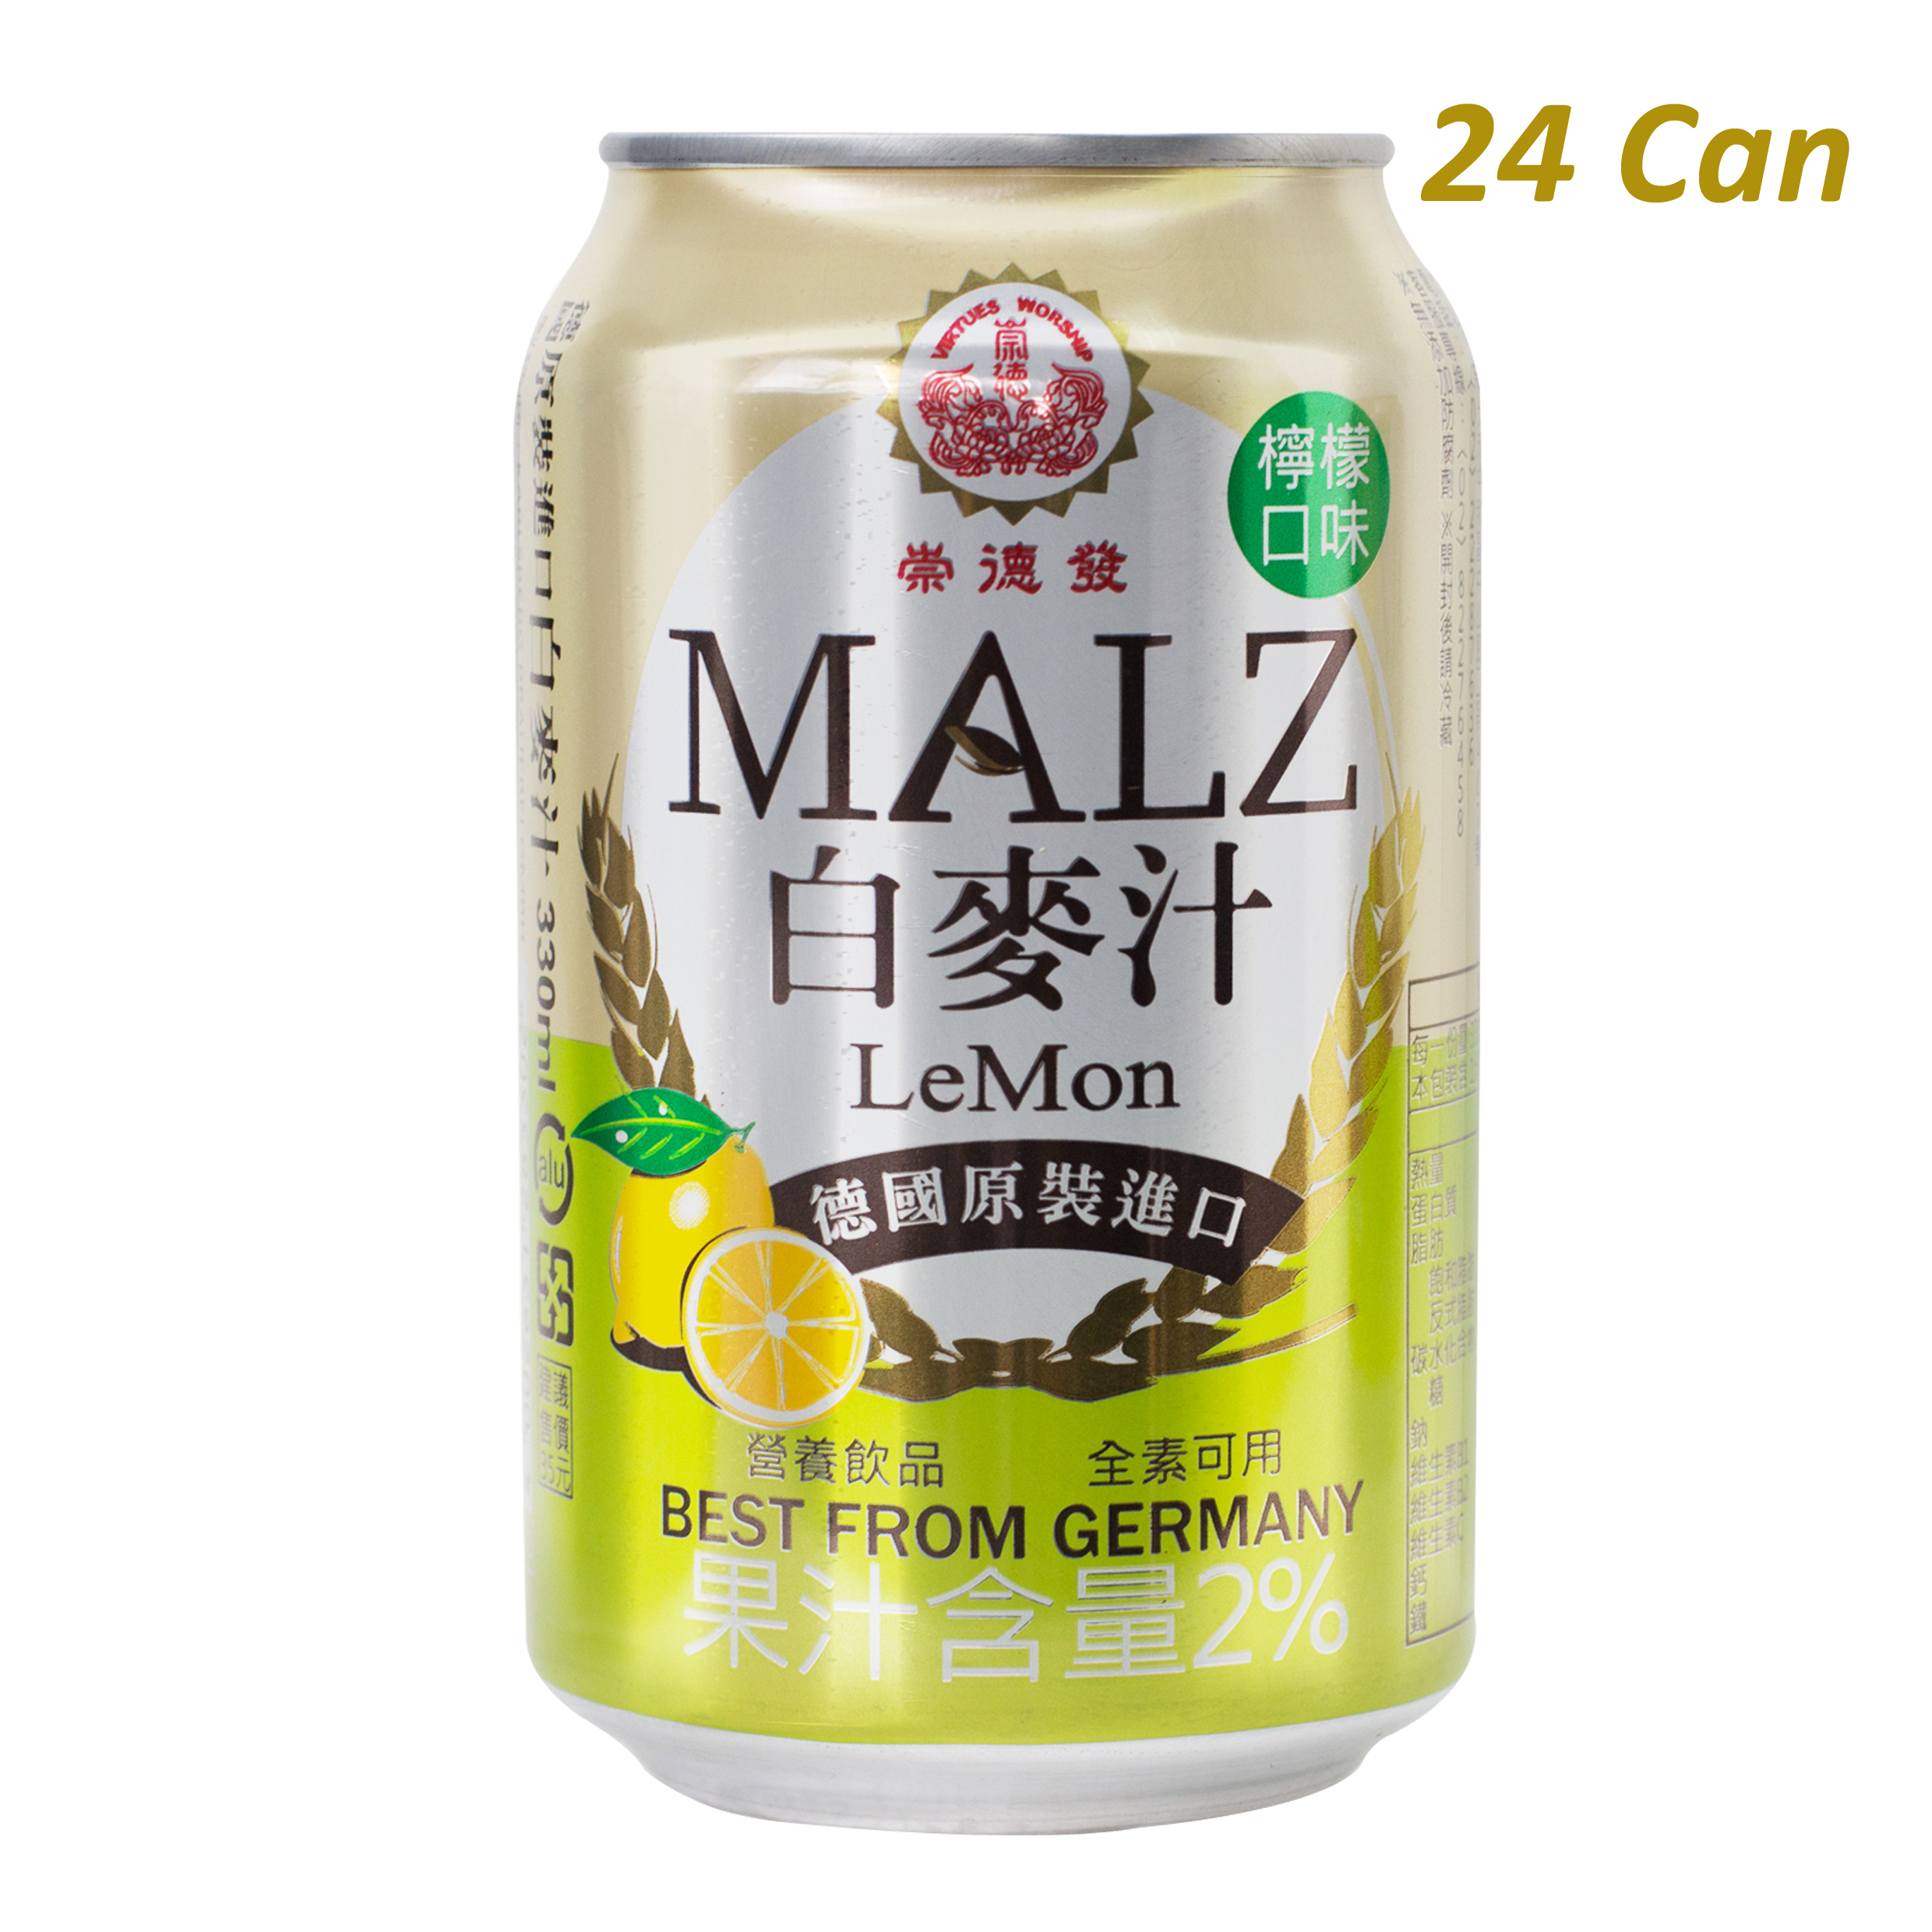 Image Lemon MALZ 崇德发 - 柠檬白麦汁(铁罐) (330ml x 24can)